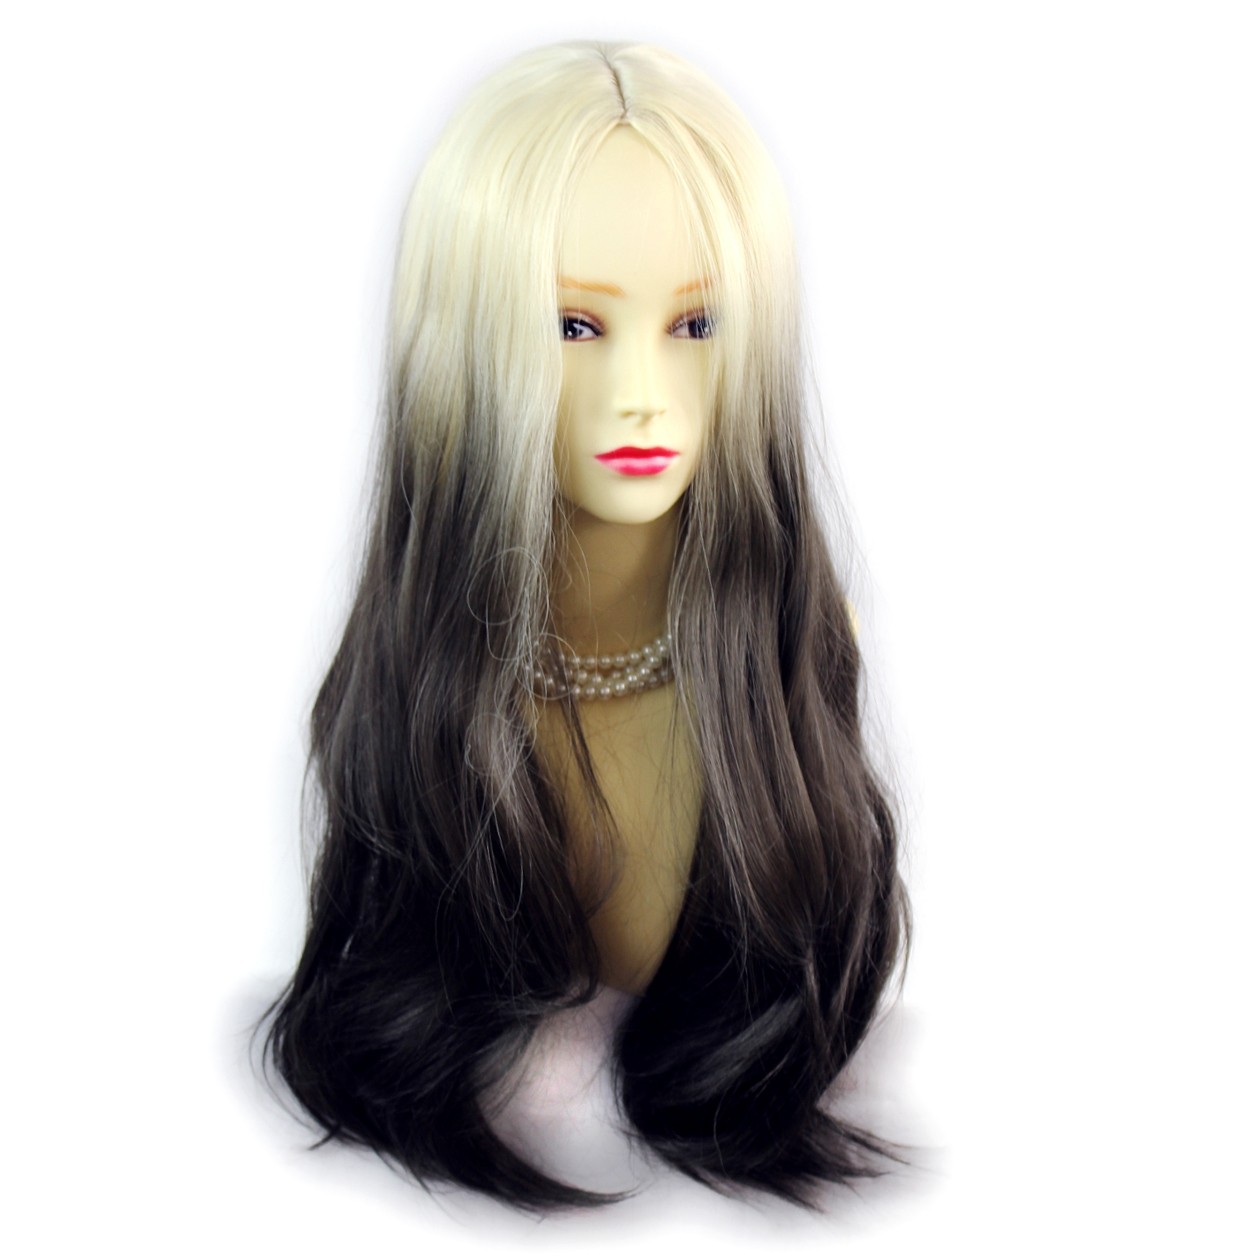 Wiwigs Wiwigs Fabulous Long Straight Wig Light Blonde